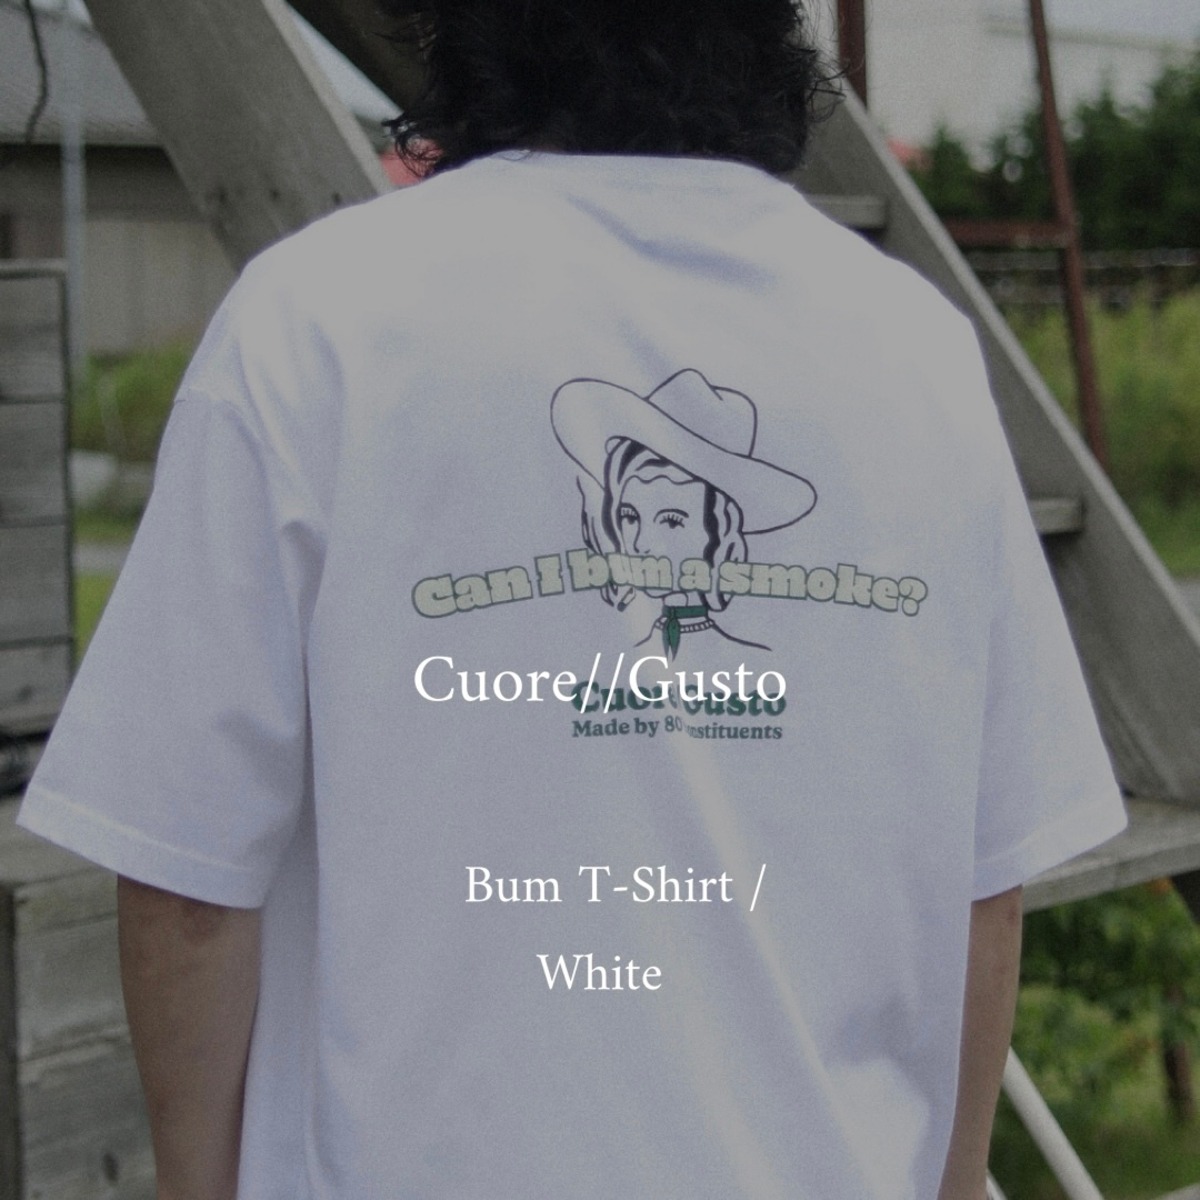 Pudsigt Ekspression Kænguru Cuore//Gusto Bum T-Shirt / White | Cuore//Gusto